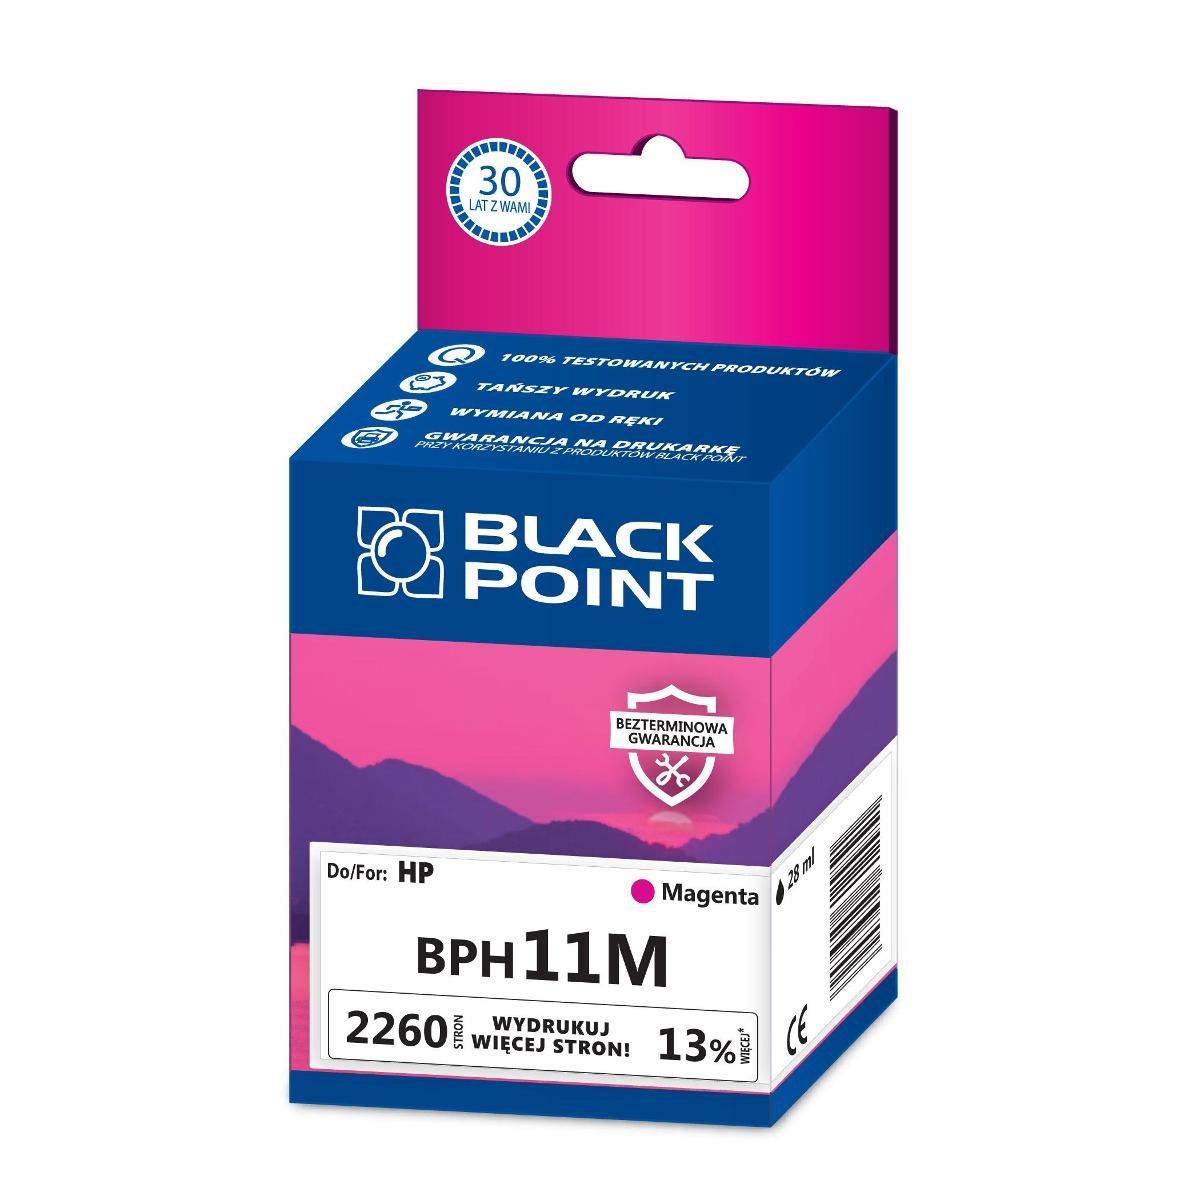 Black Point BPH11M zamiennik HP C4837AE